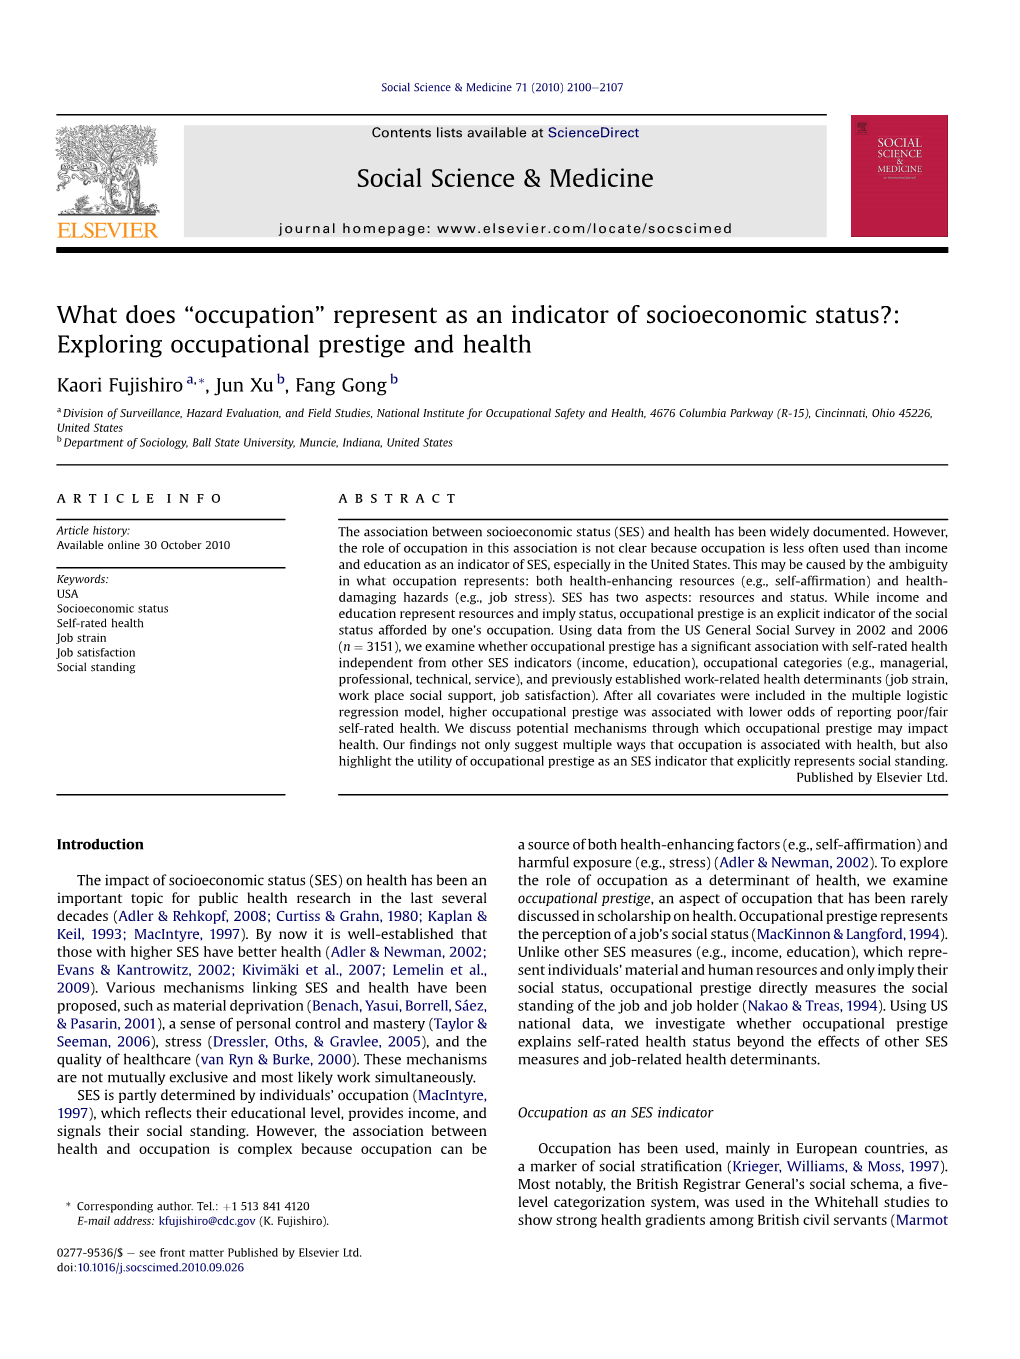 Represent As an Indicator of Socioeconomic Status?: Exploring Occupational Prestige and Health